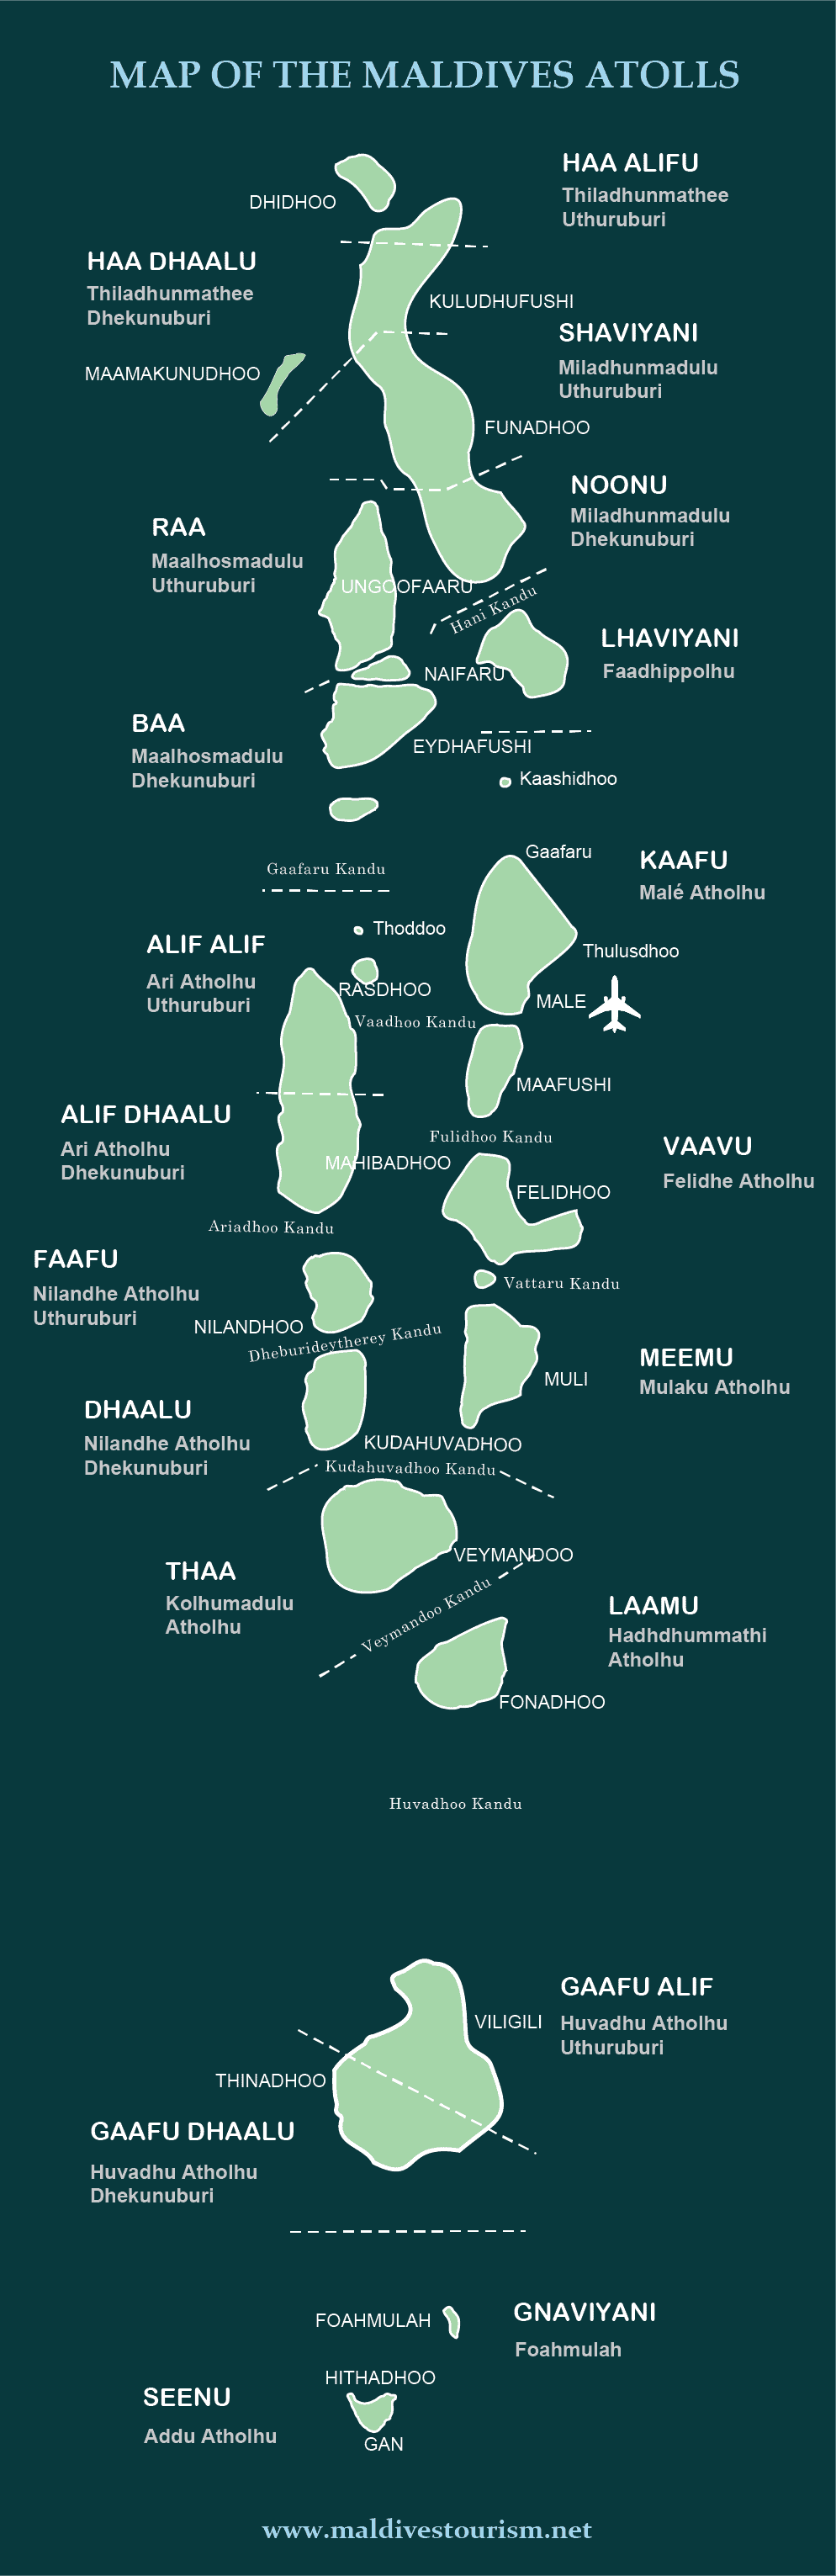 Maldives atoll map